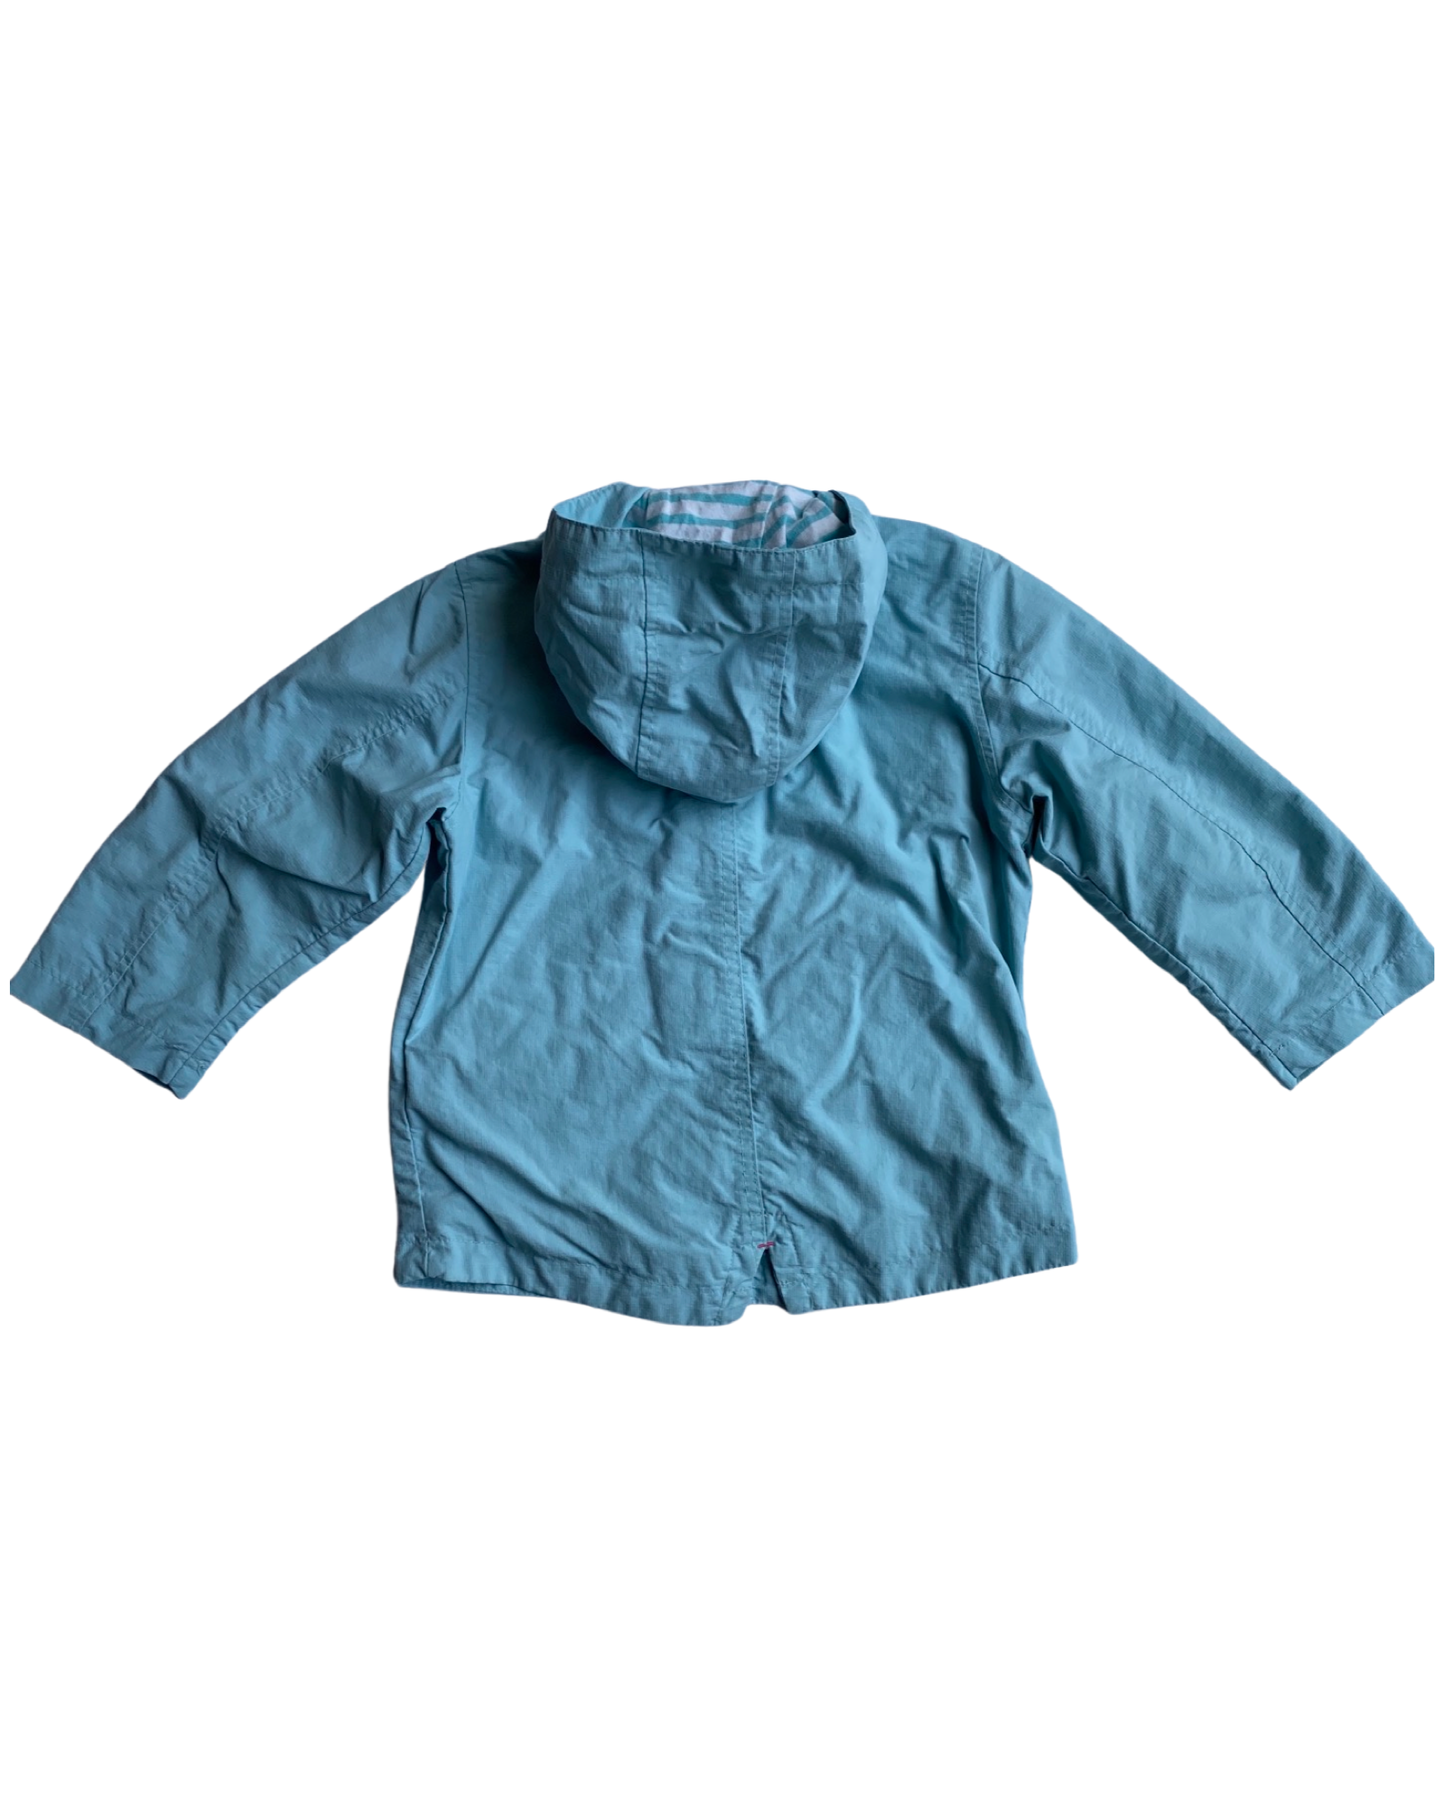 Next lightweight rain jacket (size 2-3yrs)